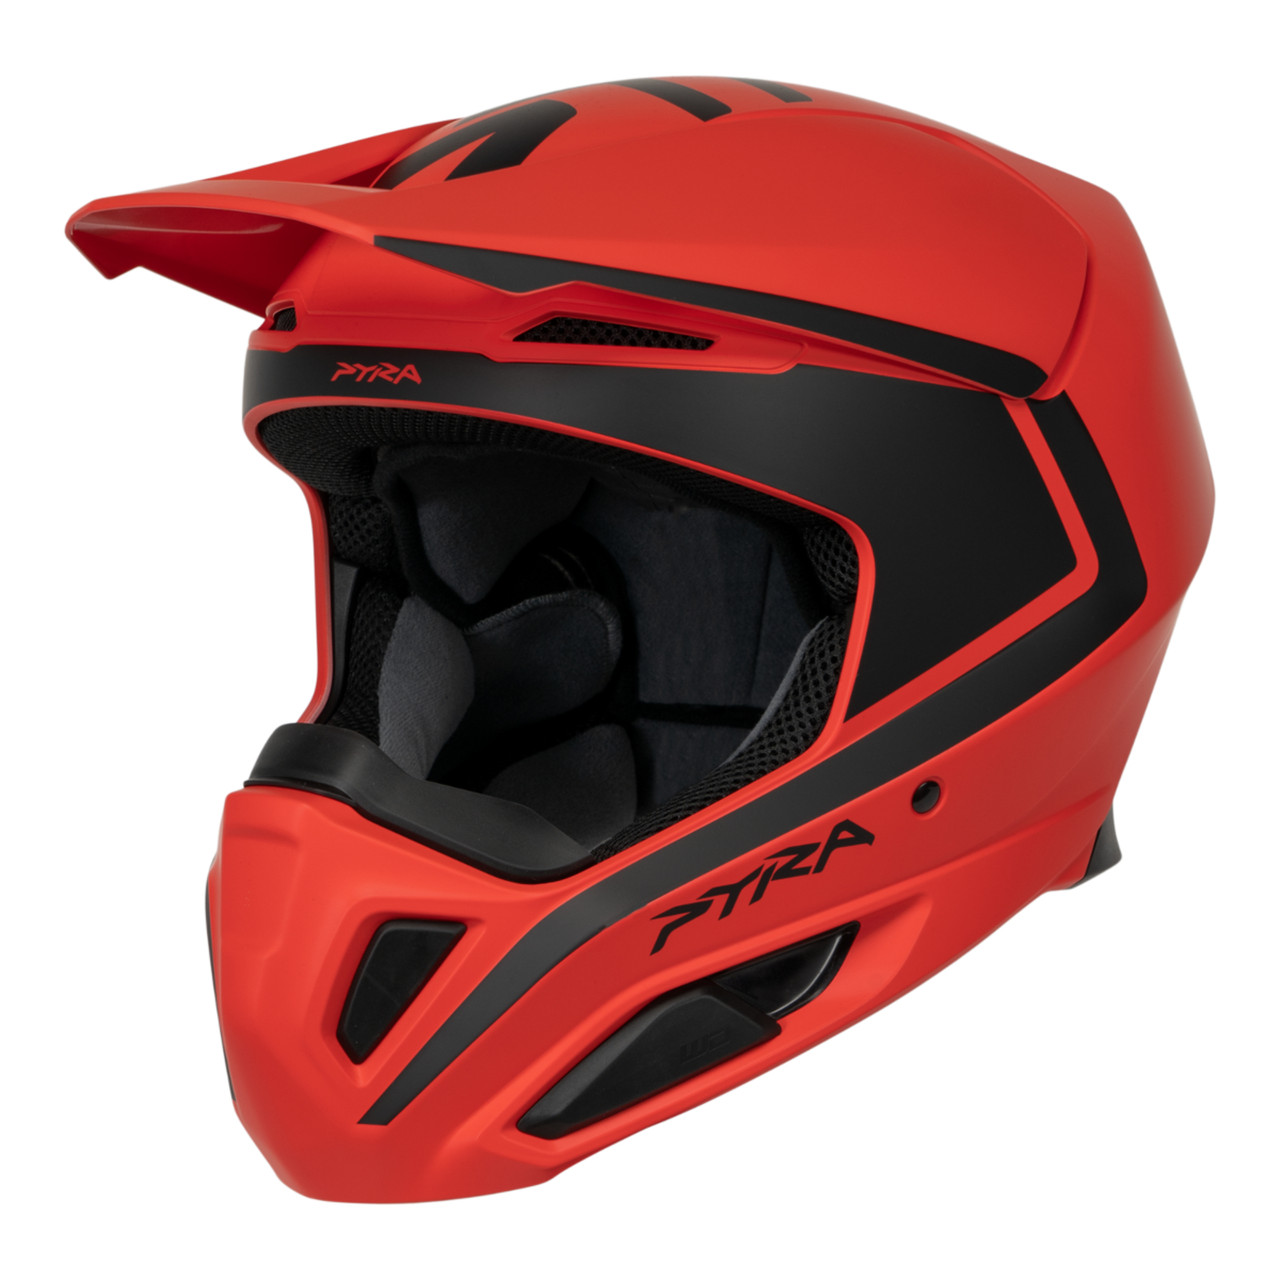 Ski-Doo New OEM Pyra Helmet (DOT/ECE), Unisex 3X-Large, 9290411630